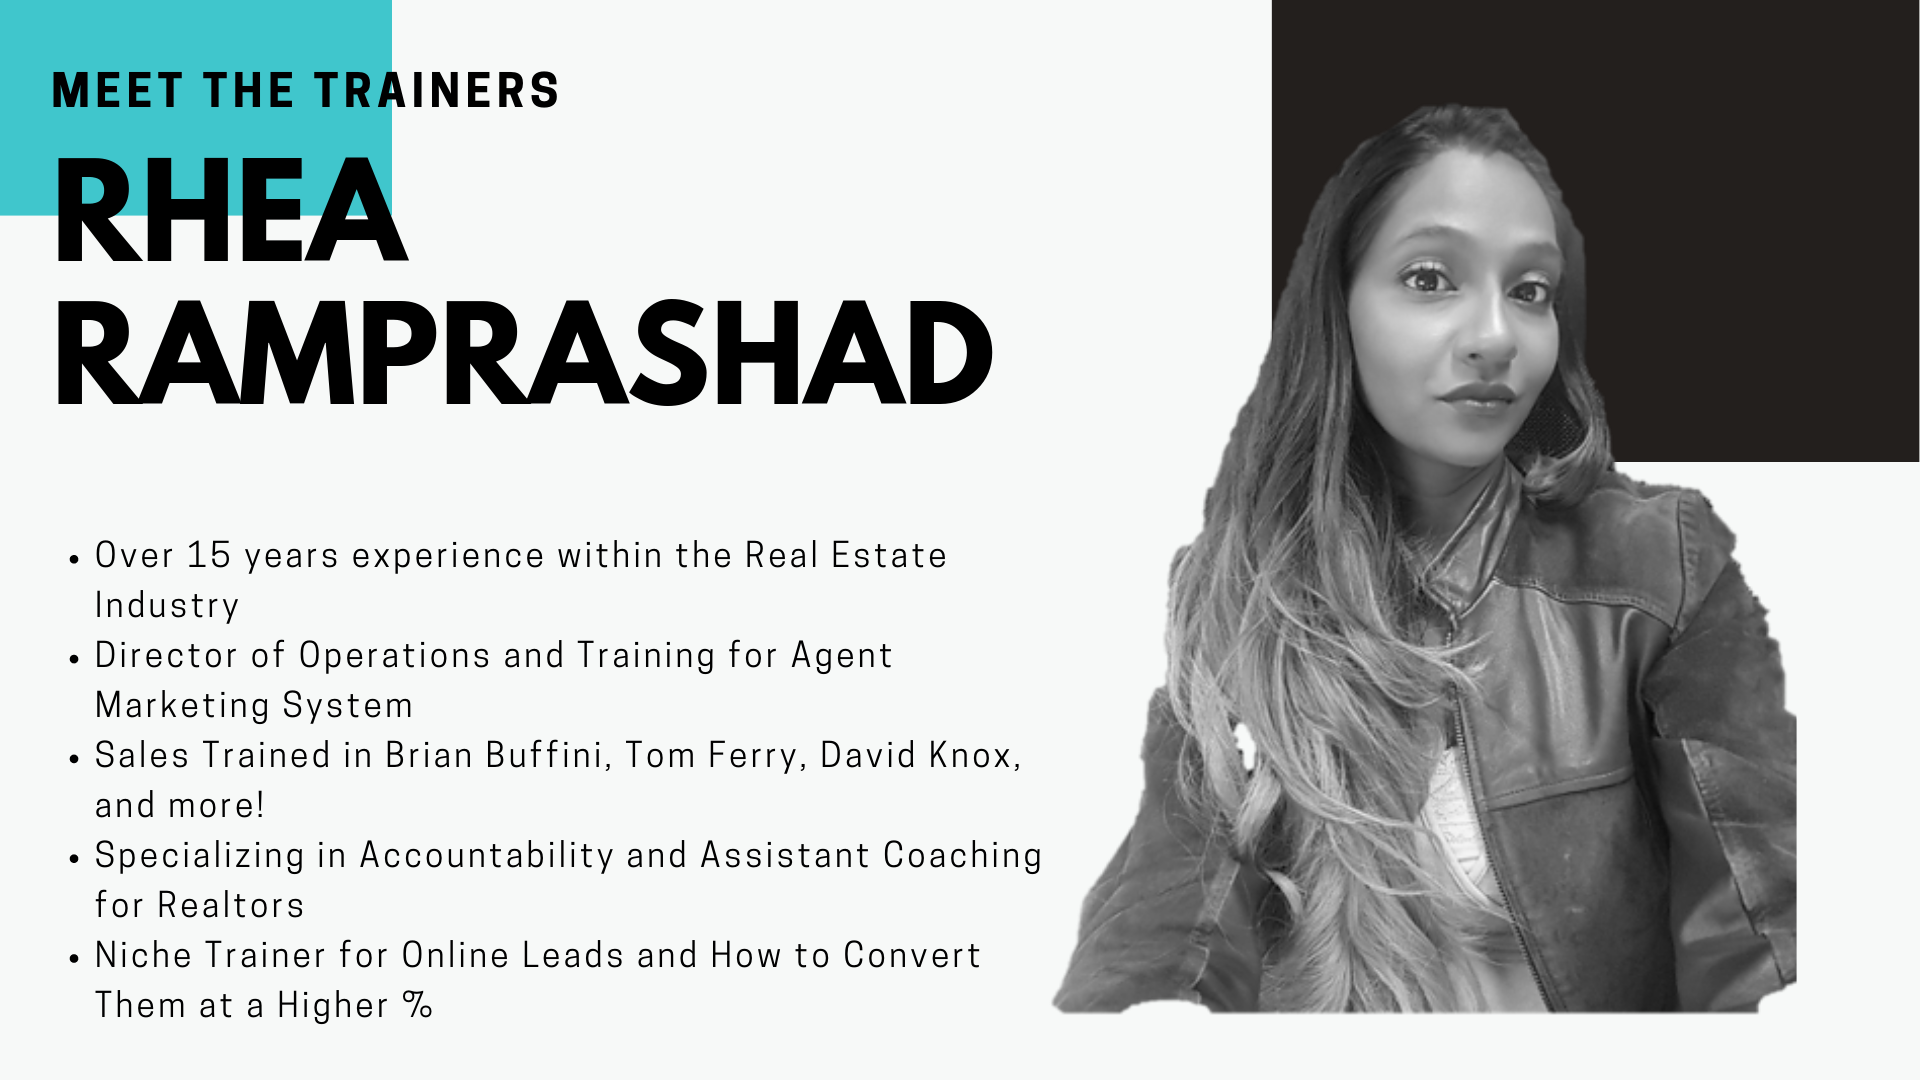 Rhea Ramprashad - Meet the Trainers